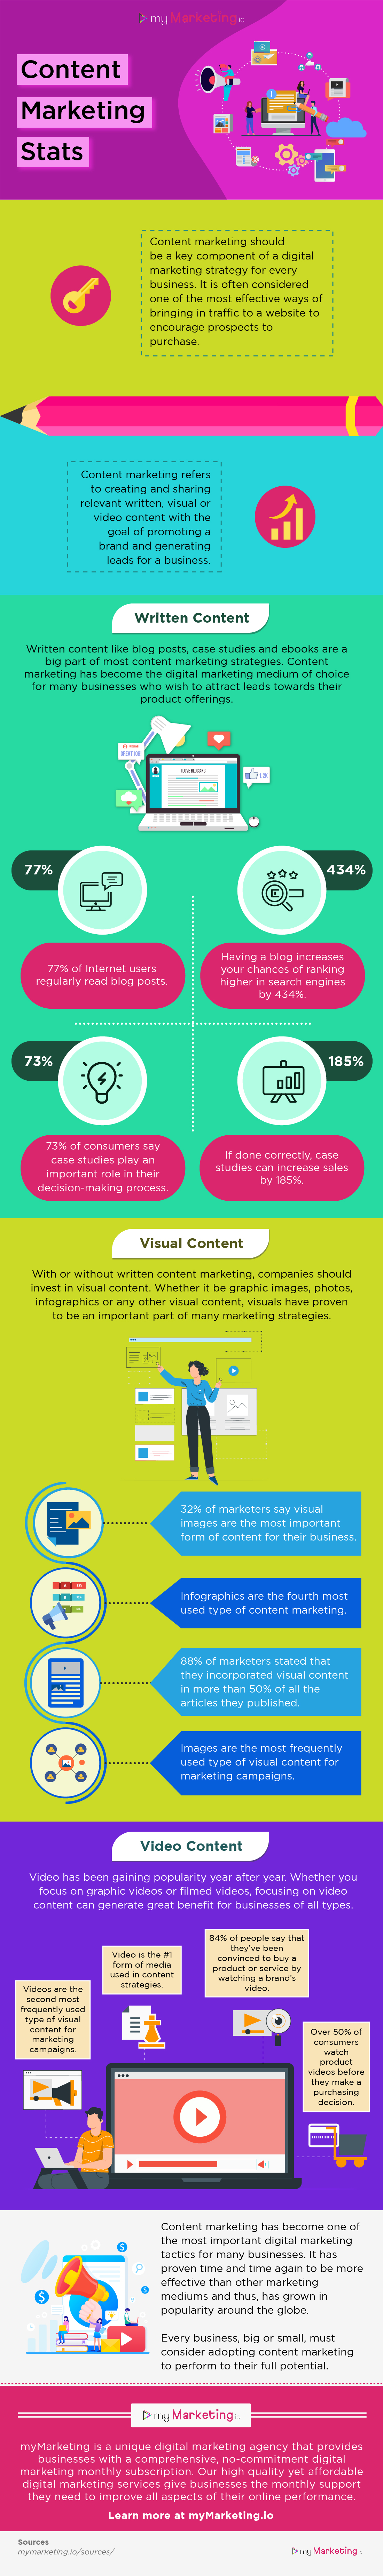 myMarketing Content Marketing Infographic